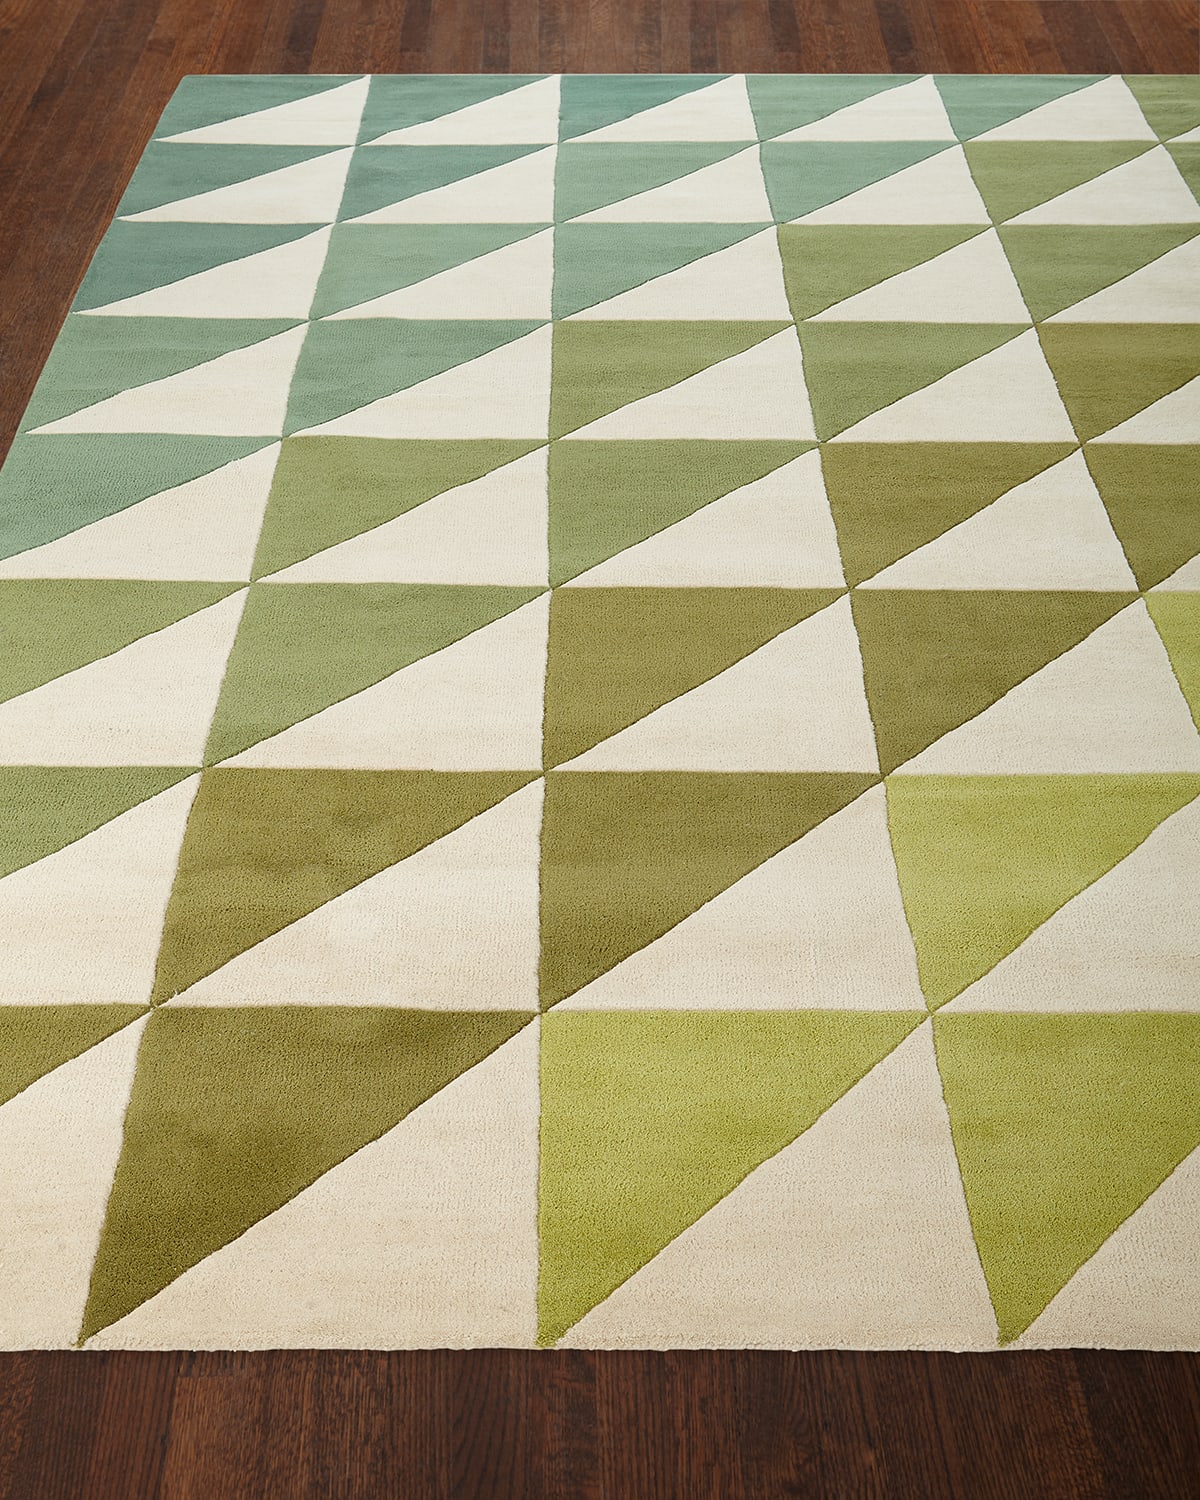 Fun Tiles Hand-Tufted Rug, 5' x 8'